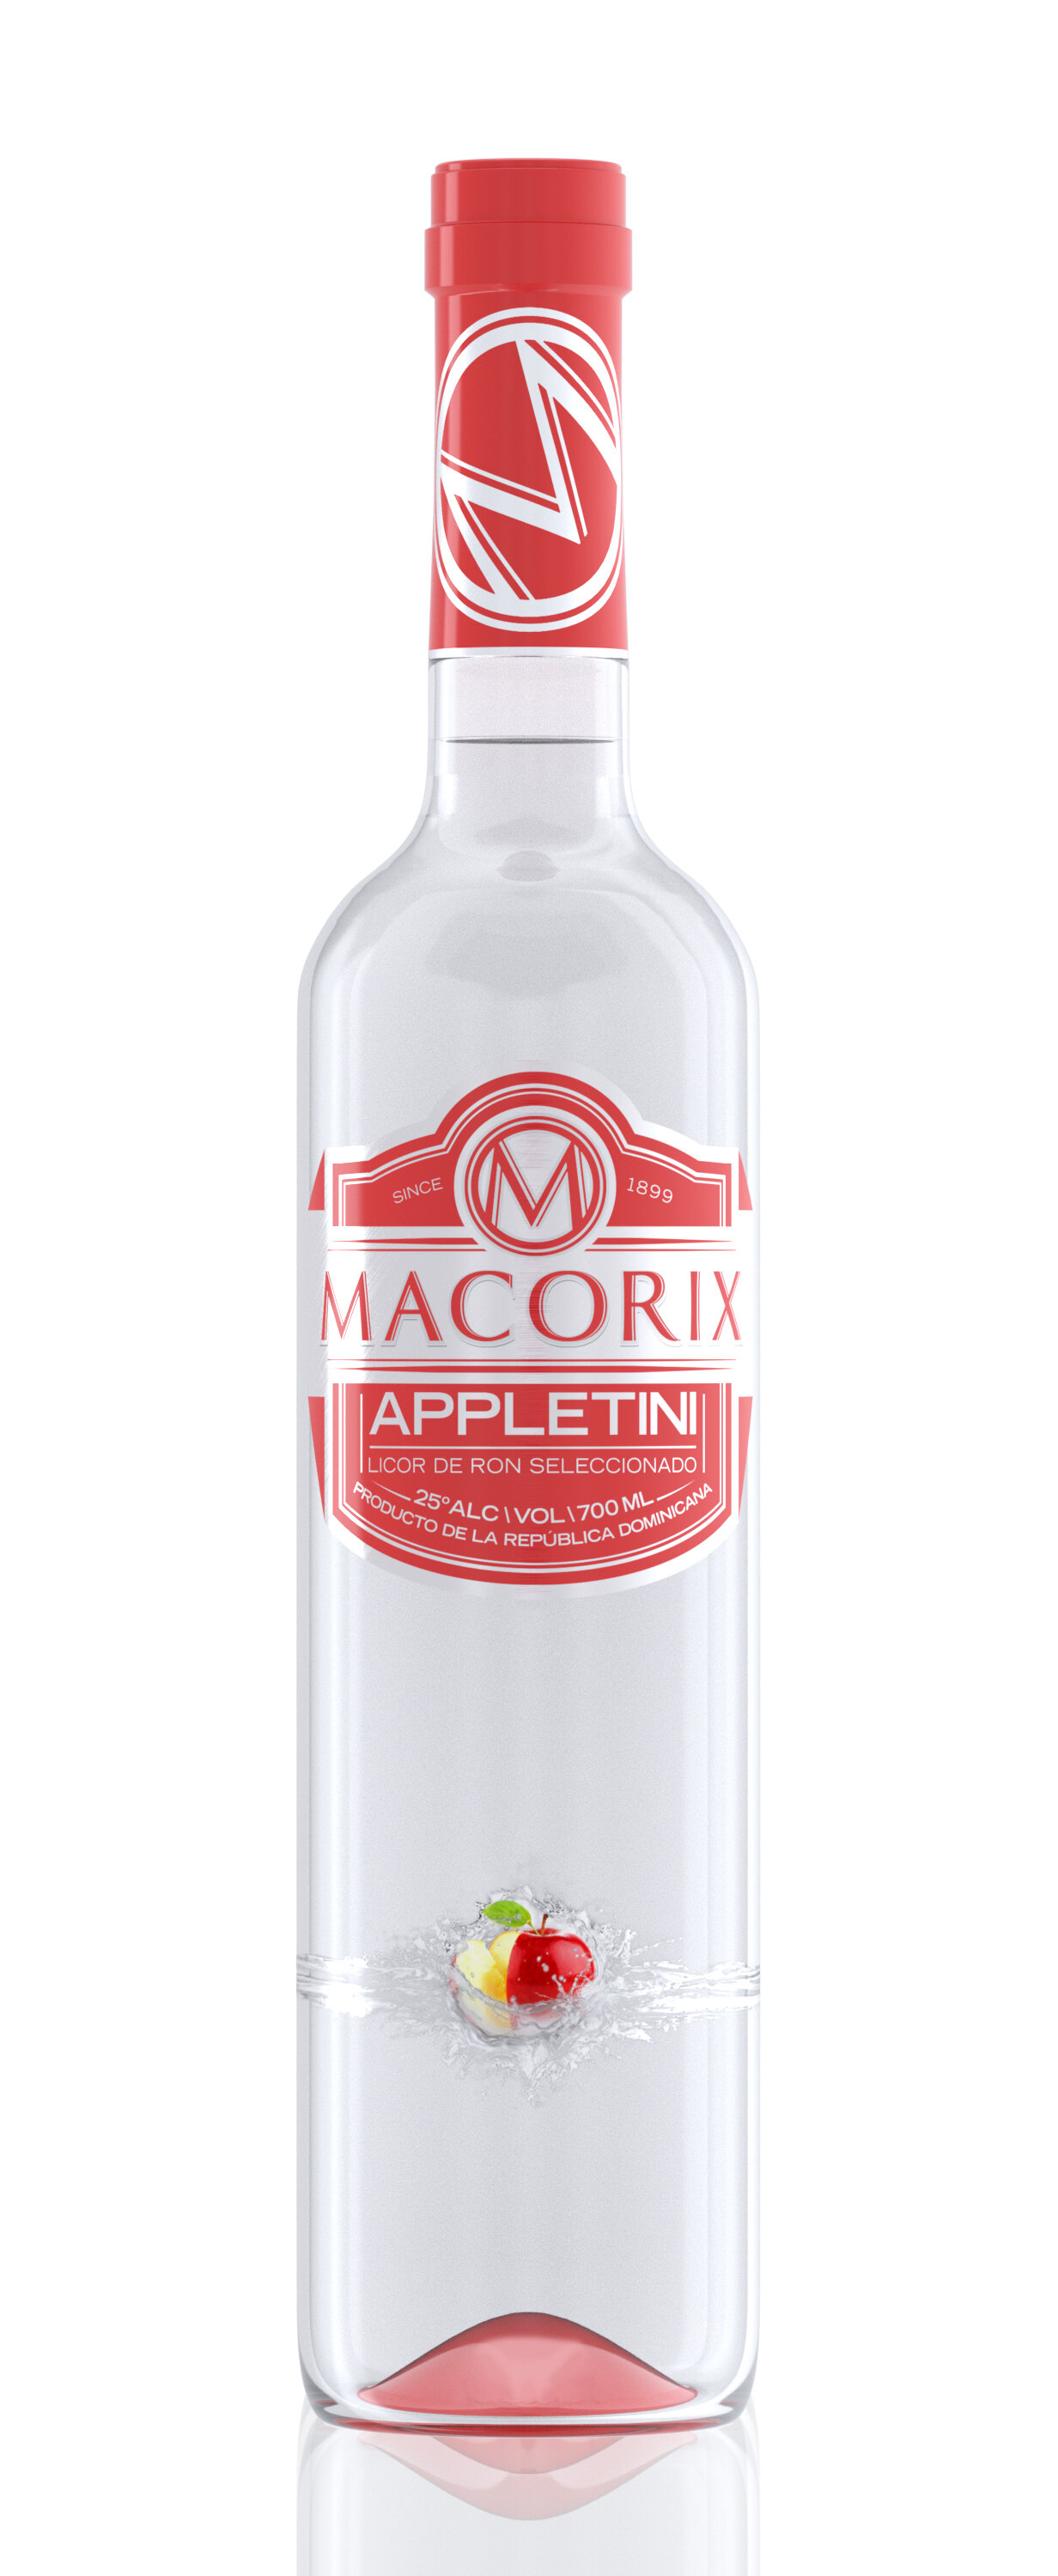 Macorix Appletini.jpg